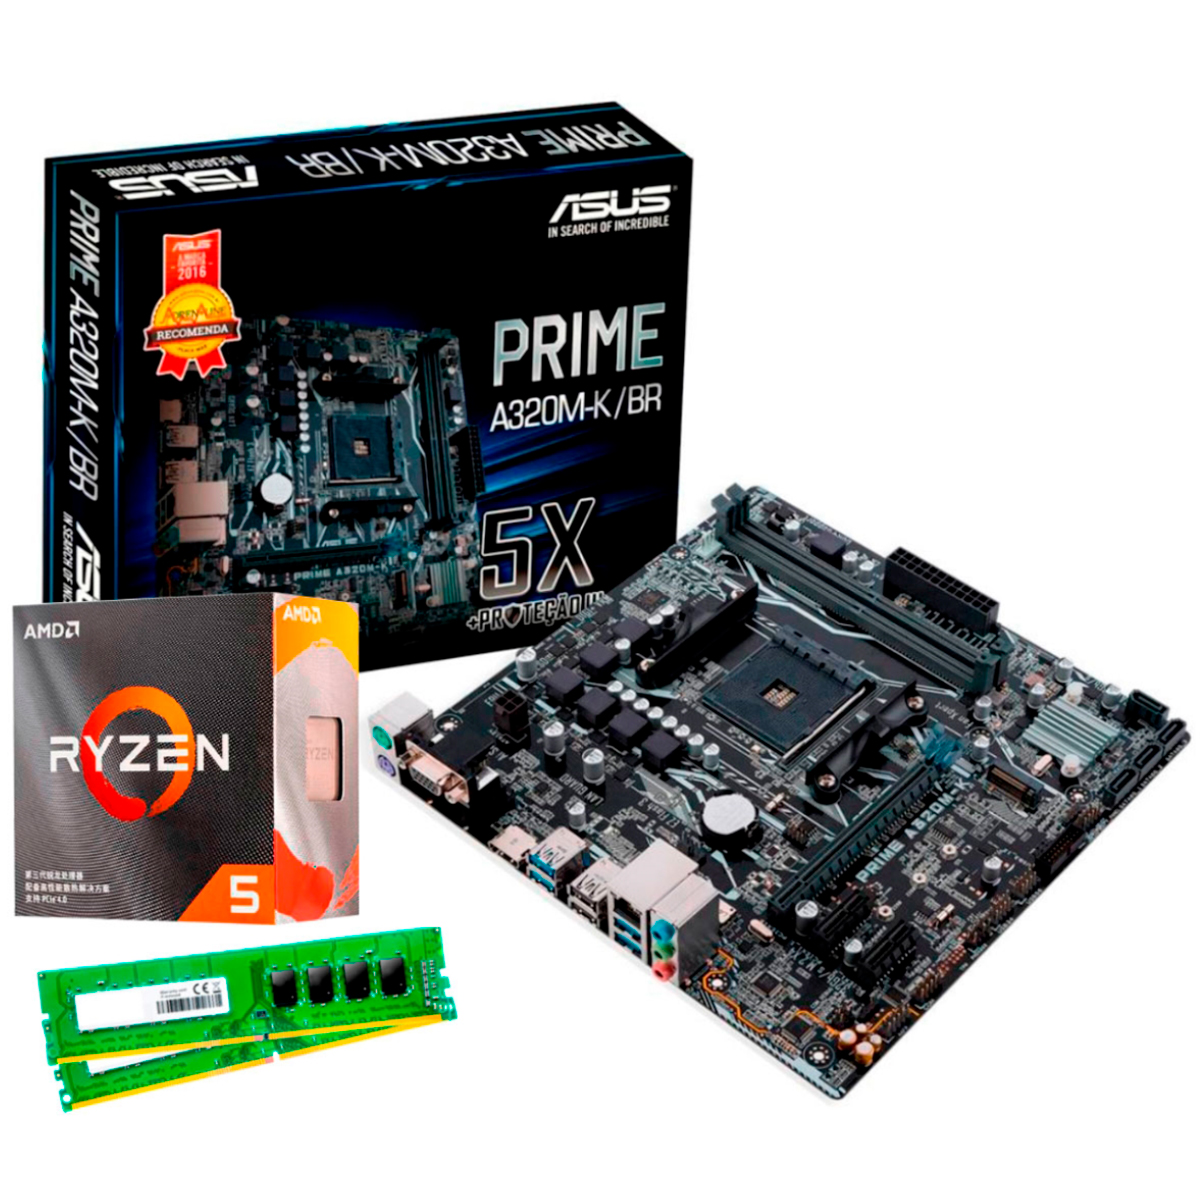 Kit Upgrade AMD Ryzen™ 5 3500X + Asus Prime A320M-K/BR + Memória 8GB DDR4